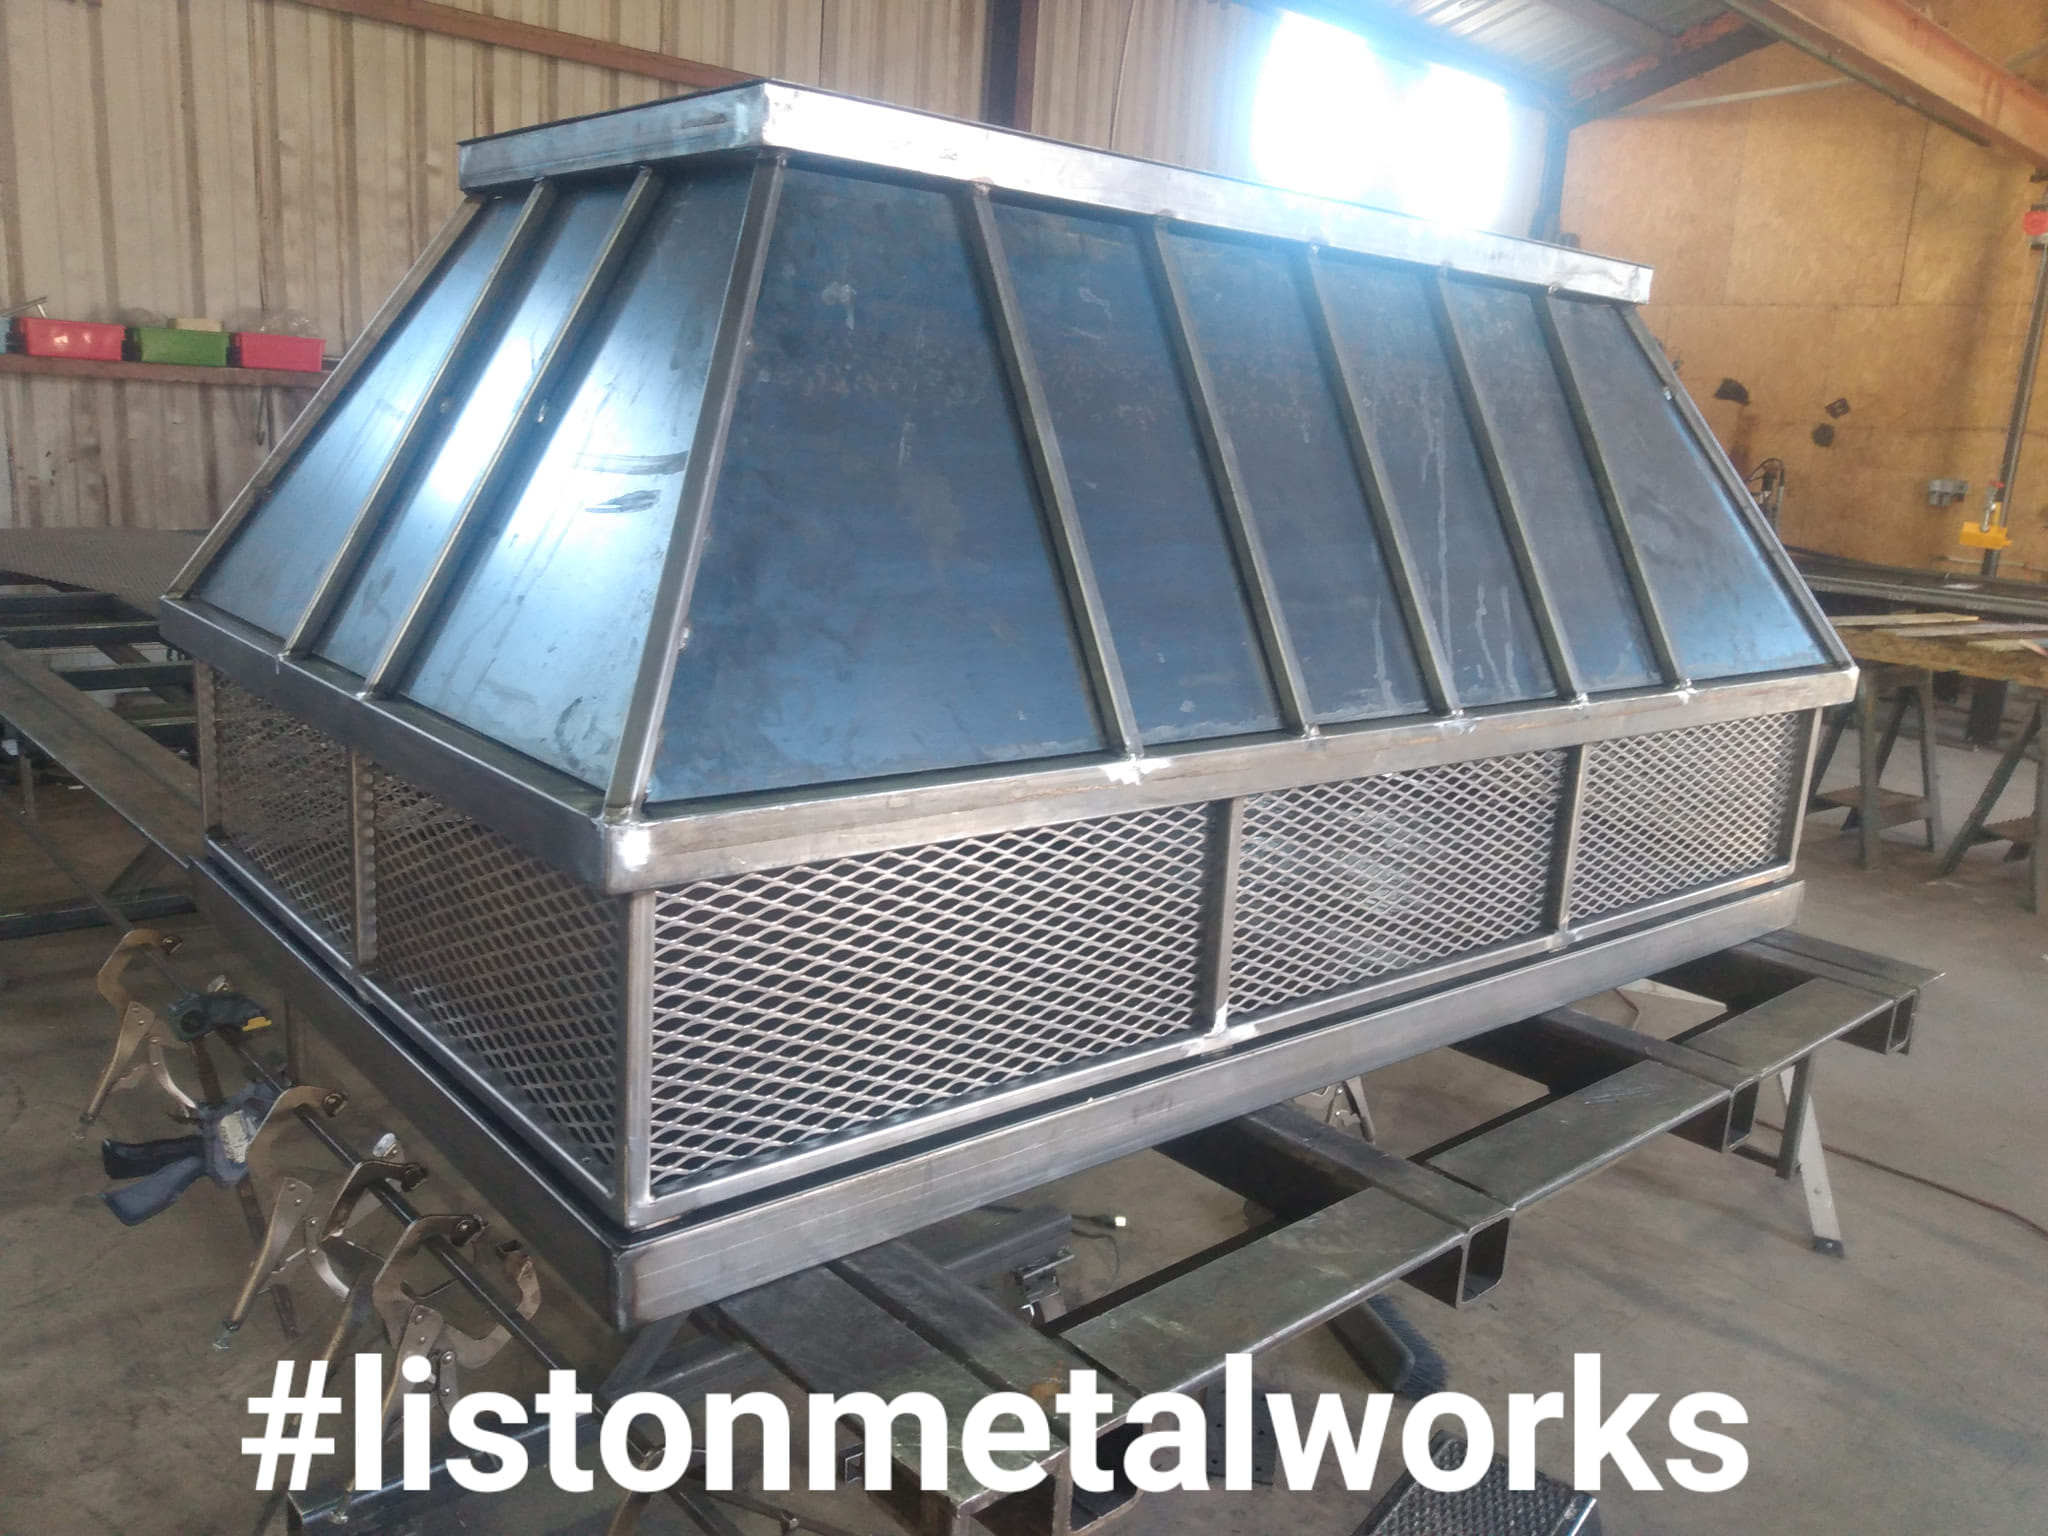 Liston Metalworks of Washington County, UT